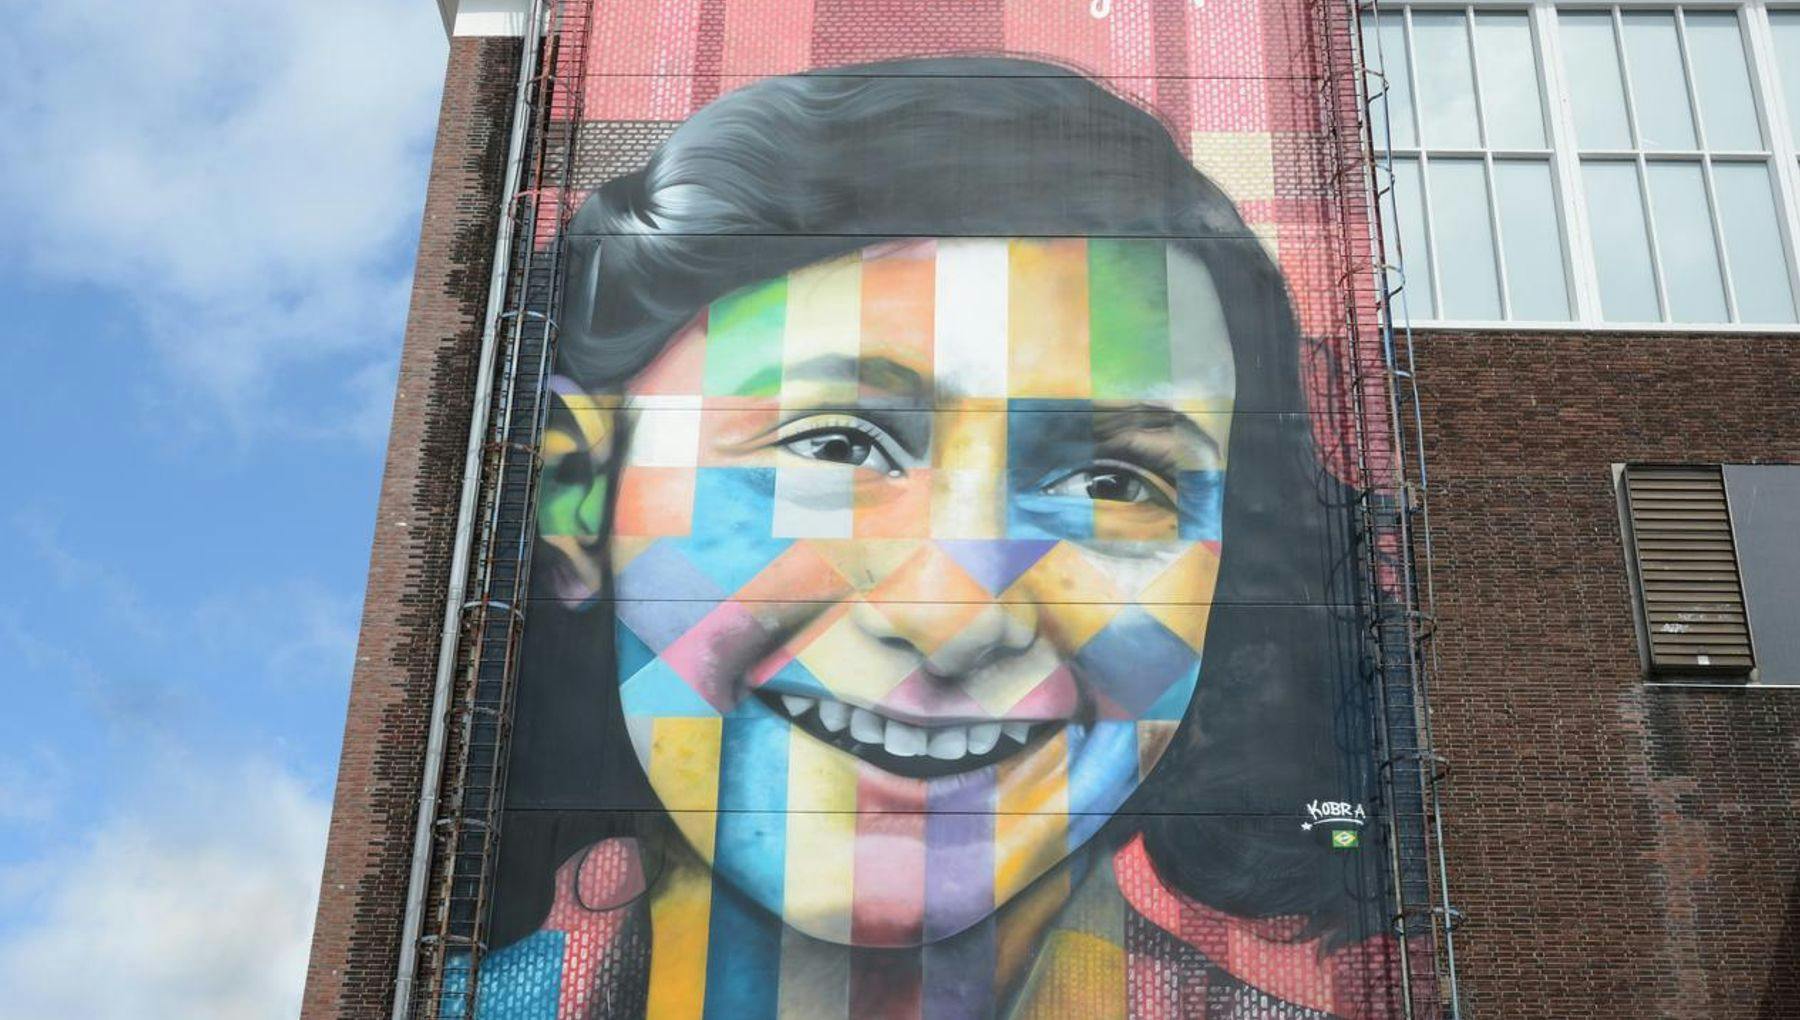 Street art in NDSM / Anne Frank mural